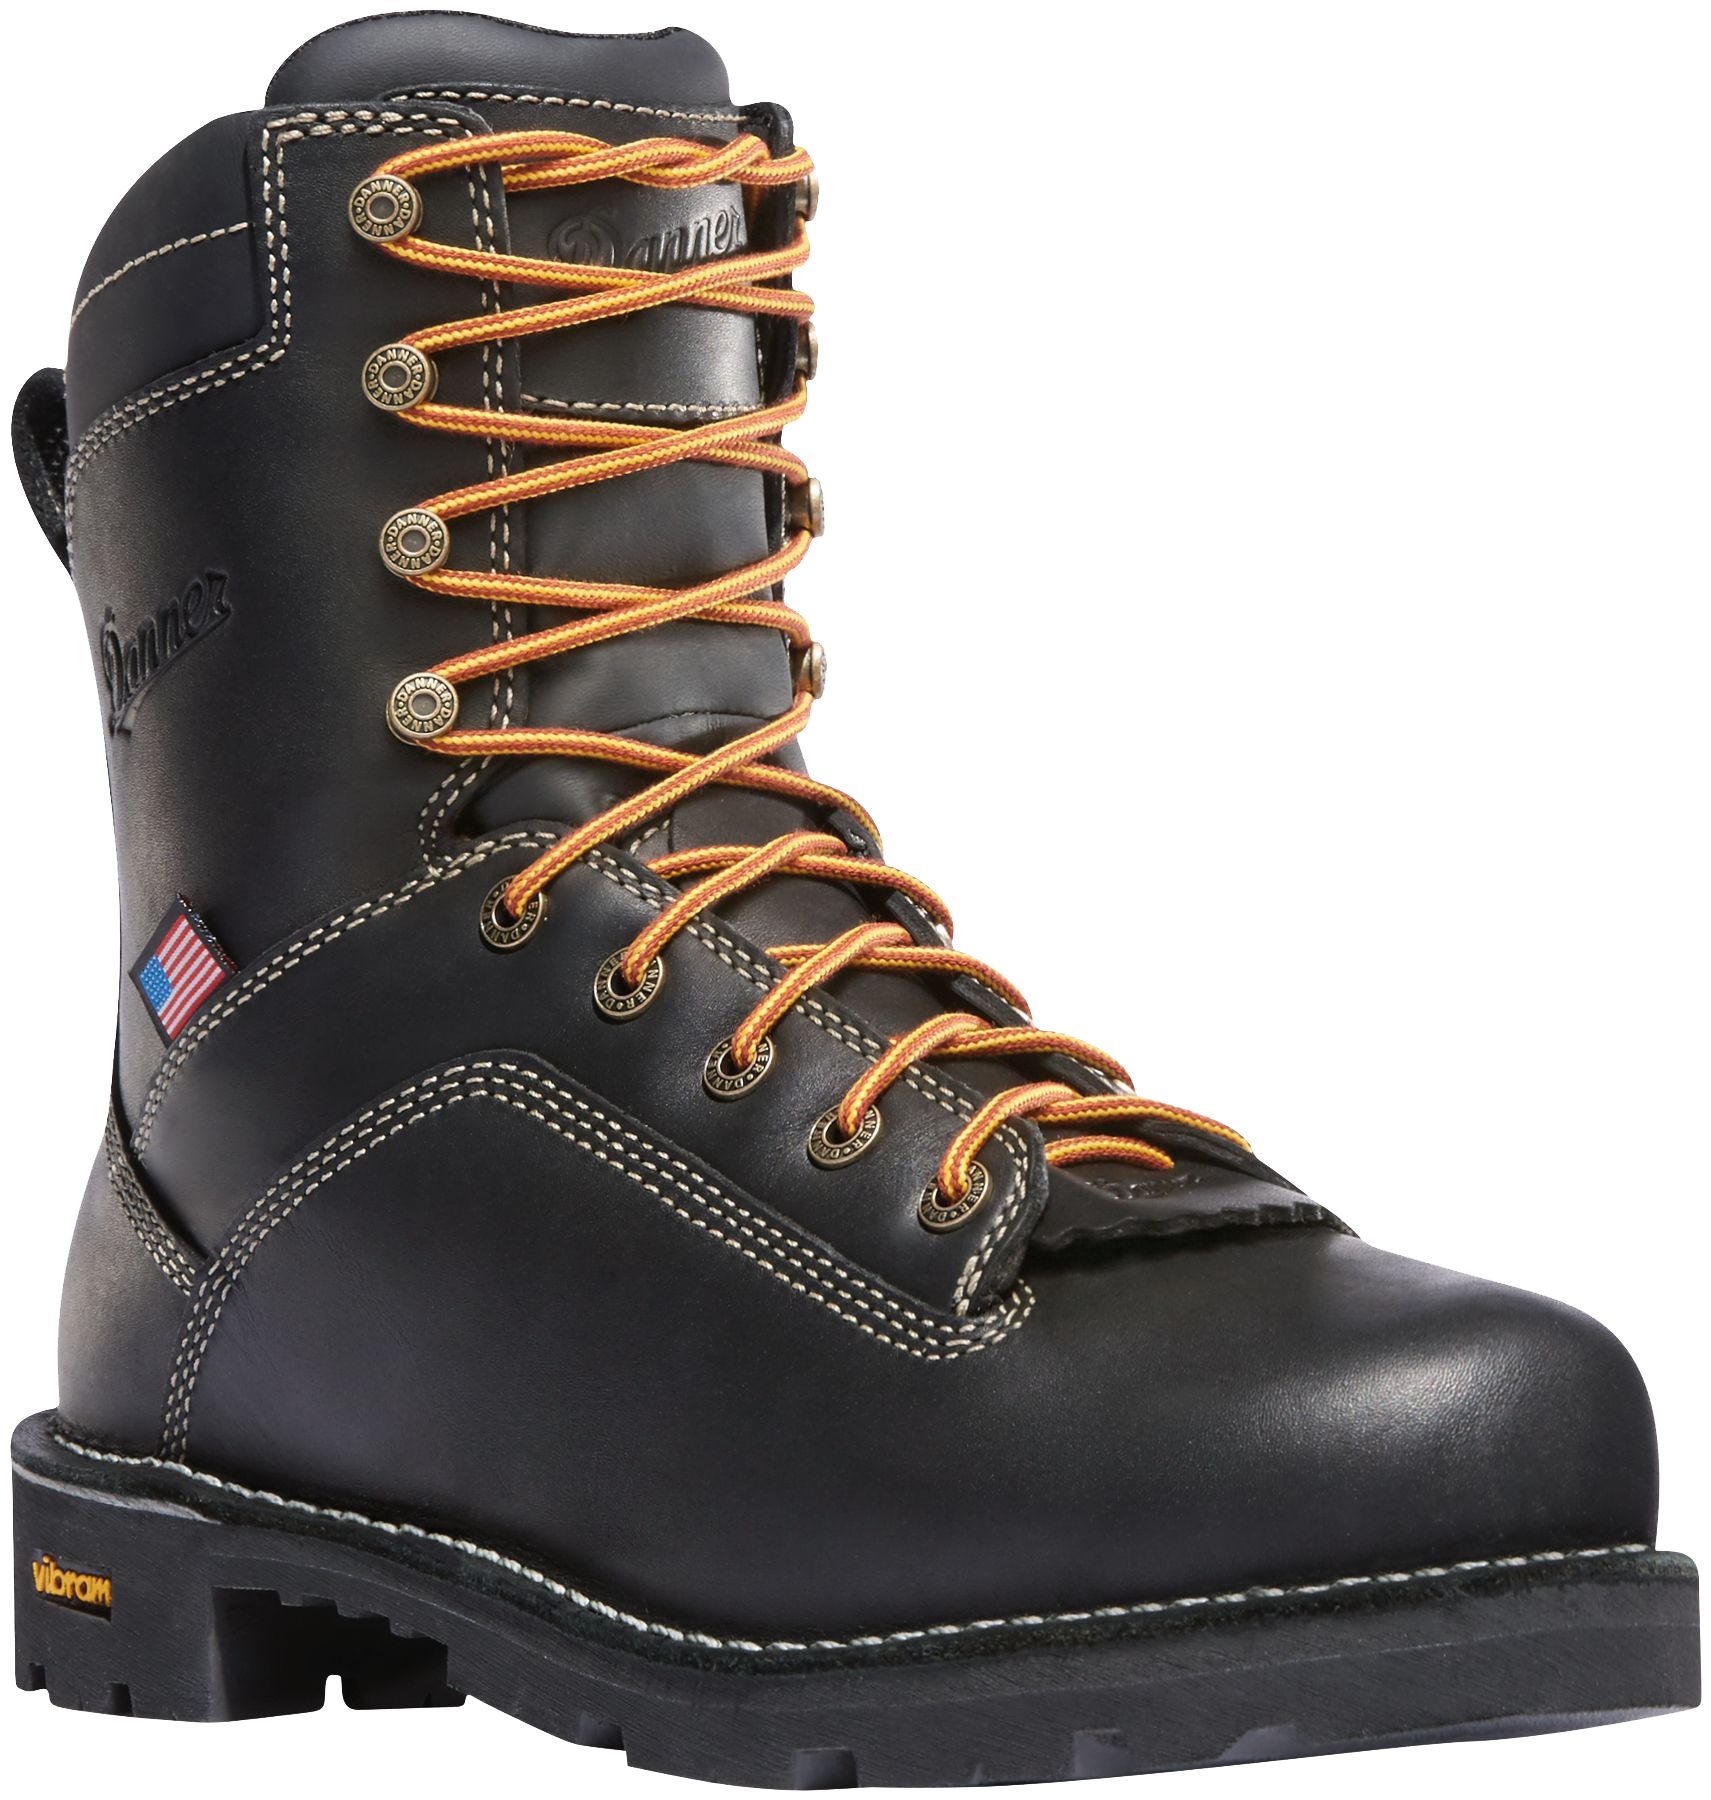 Danner Quarry USA GORE-TEX Work Boots for Men - Black - 8.5M